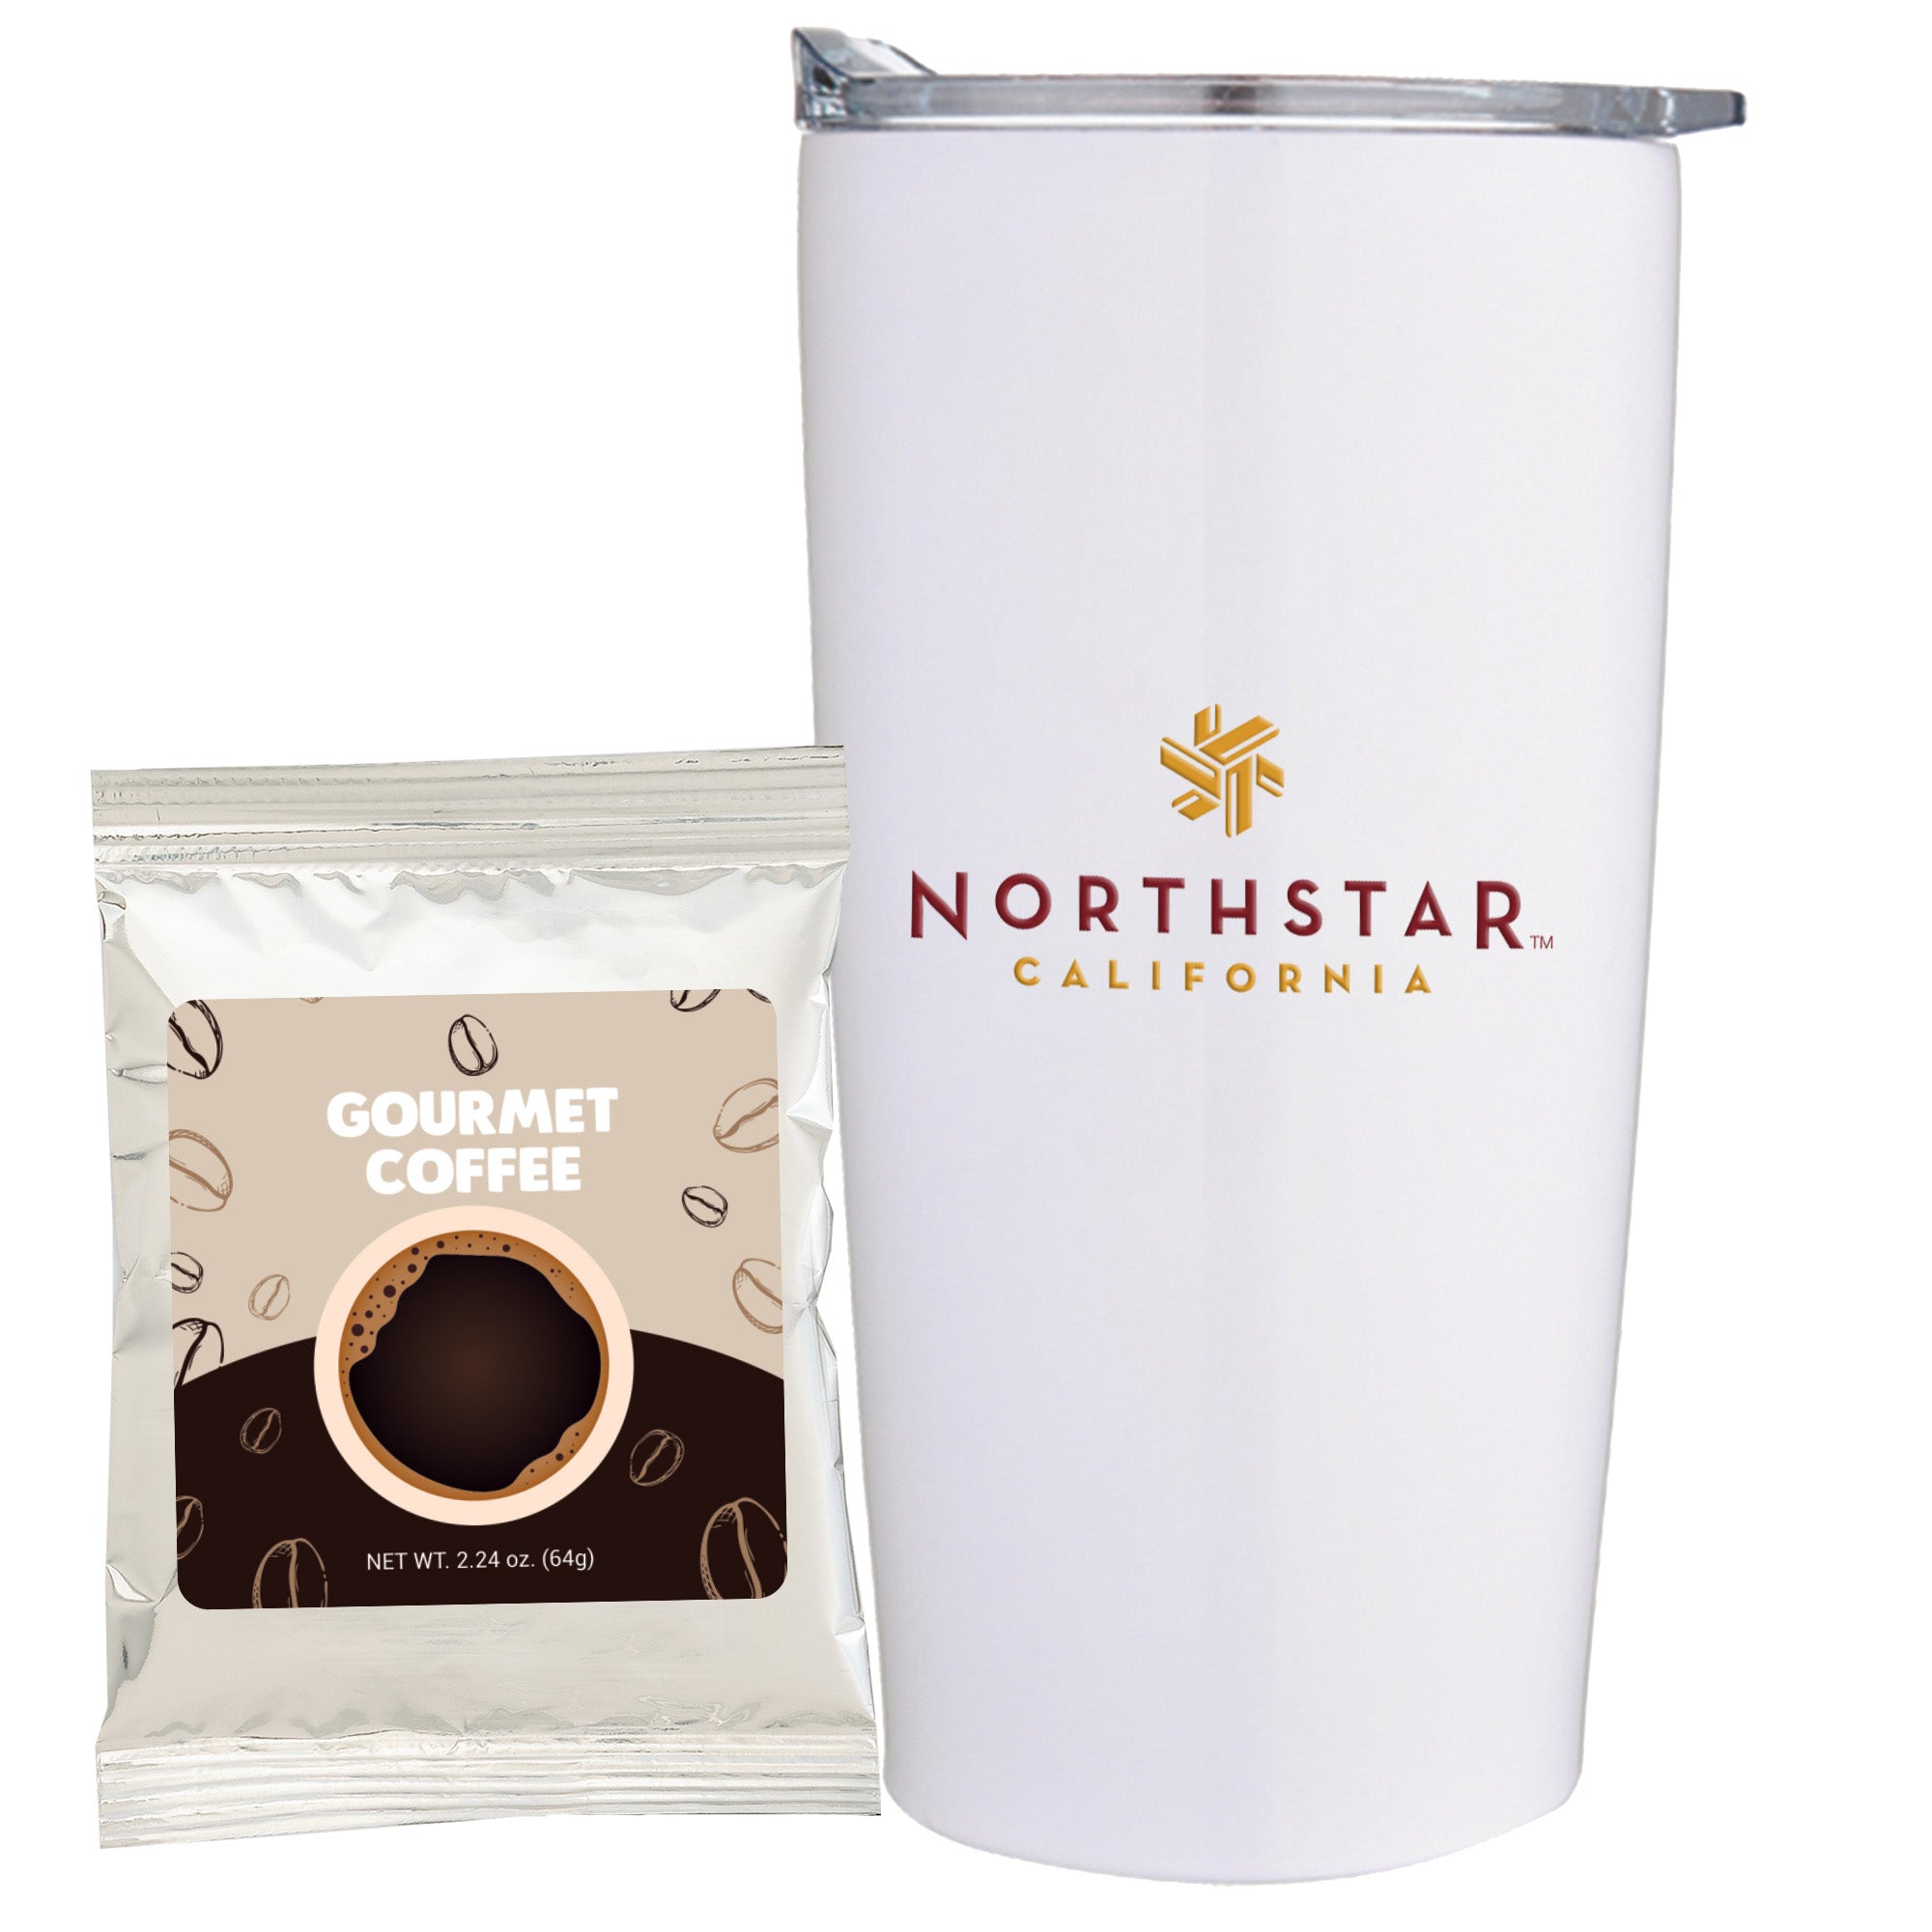 Straight Tumbler - 20 oz., Starbucks® Via Hot Coffee, Espresso Beans -  Promo Revolution